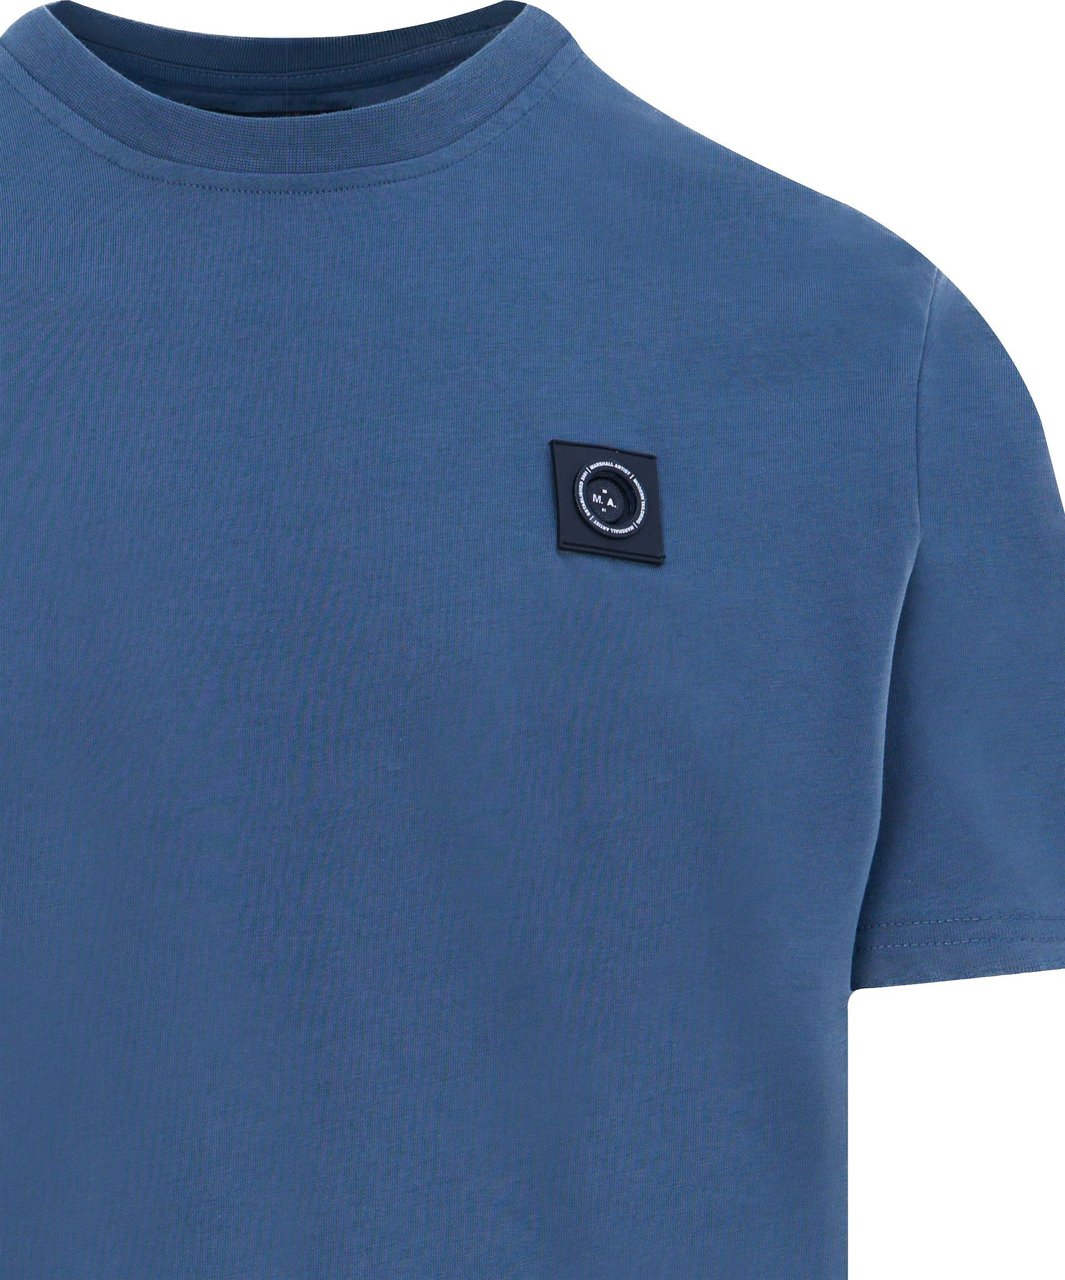 Marshall Artist Siren T-shirt Slate Blue Blauw